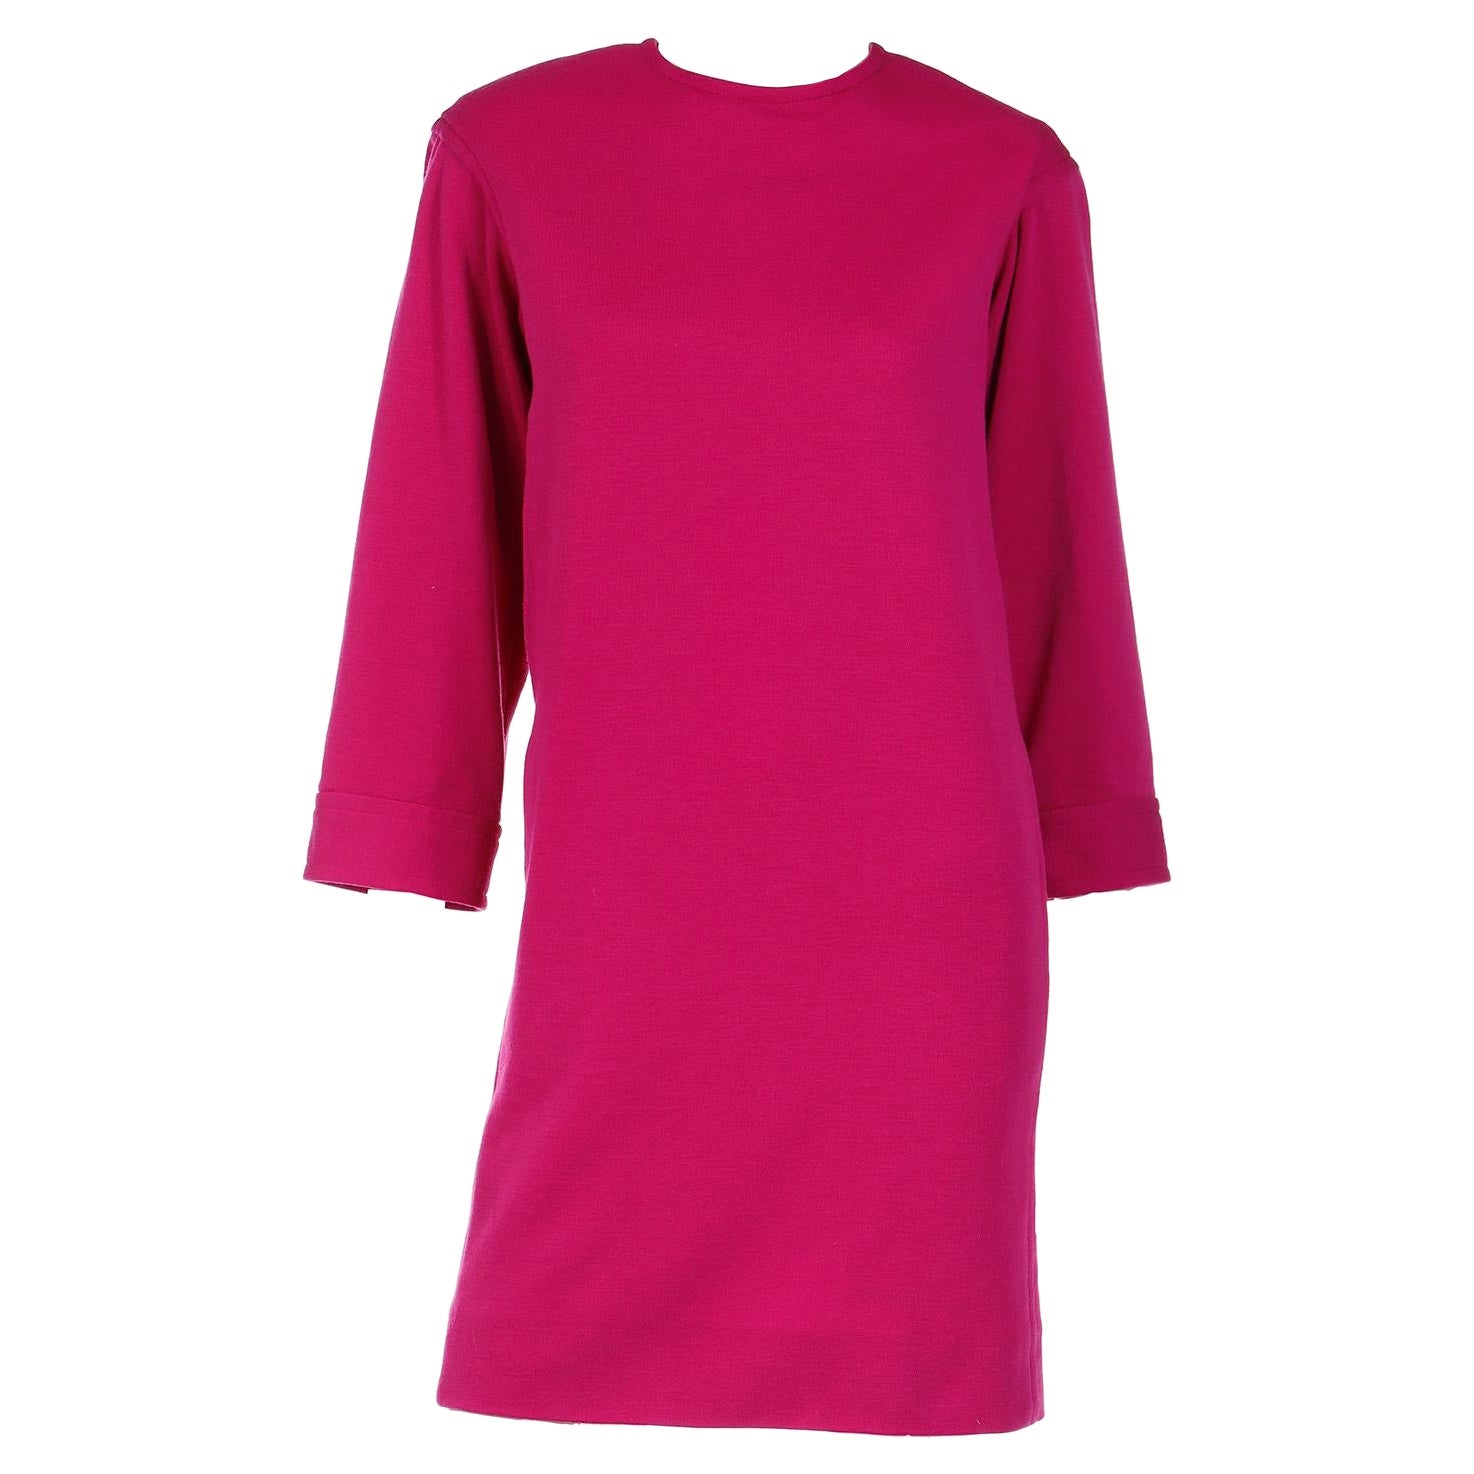 S/S 1990 Vintage Yves Saint Laurent Magenta Pink Wool Shift Dress